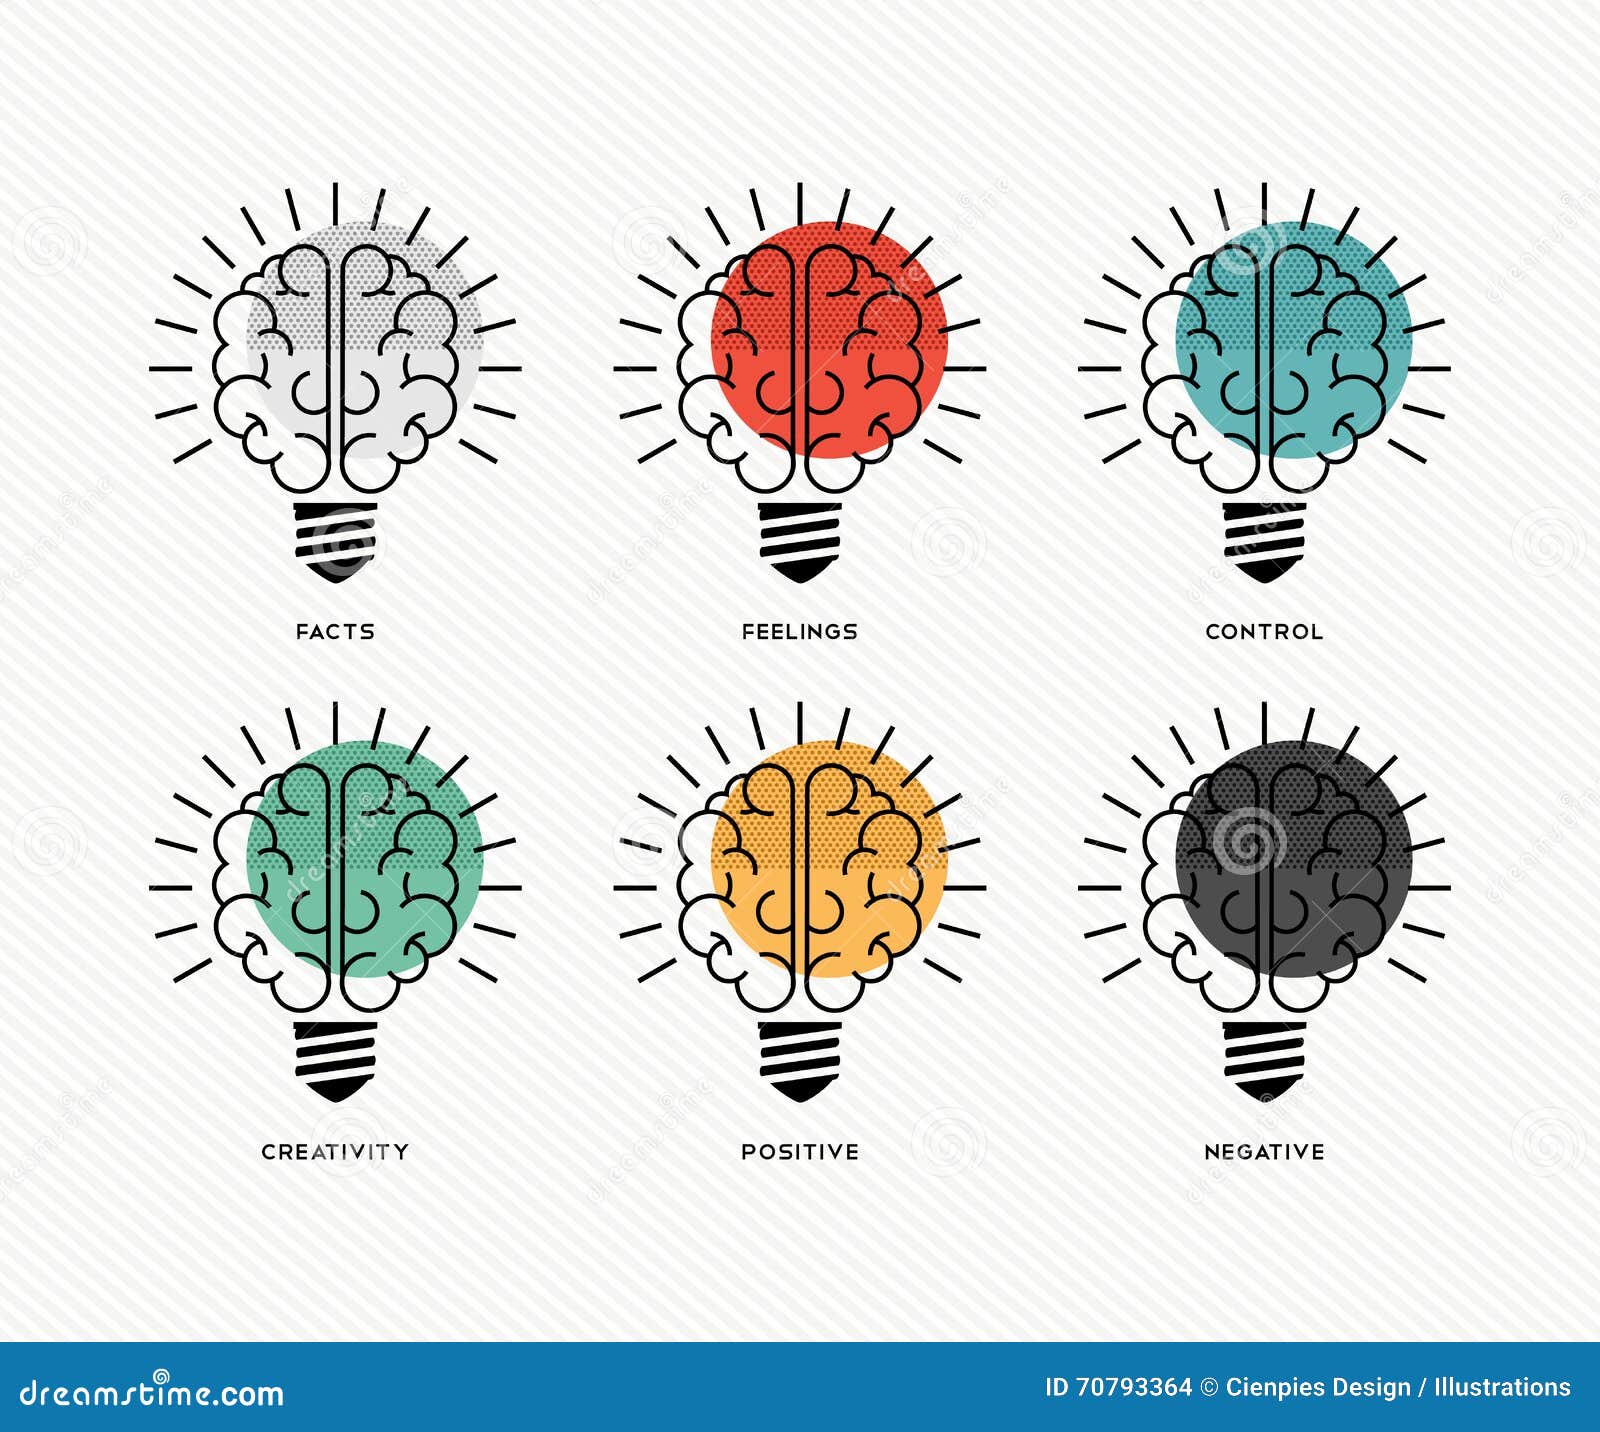 six thinking hats human brain concept 